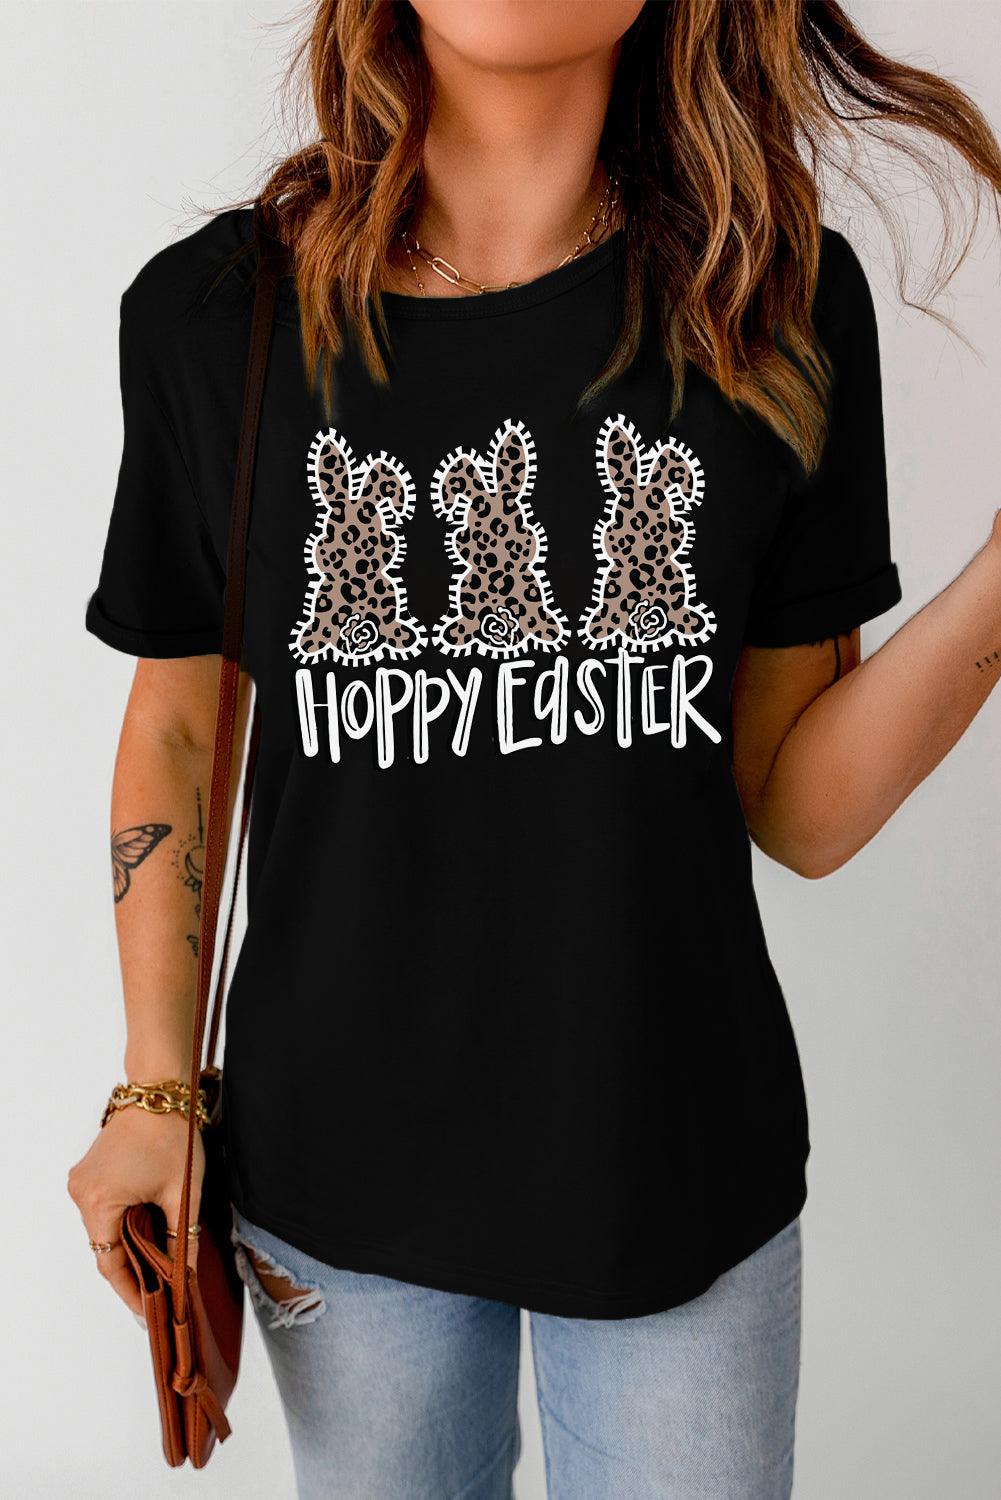 HOPPY EASTER Graphic Tee Shirt - Flyclothing LLC